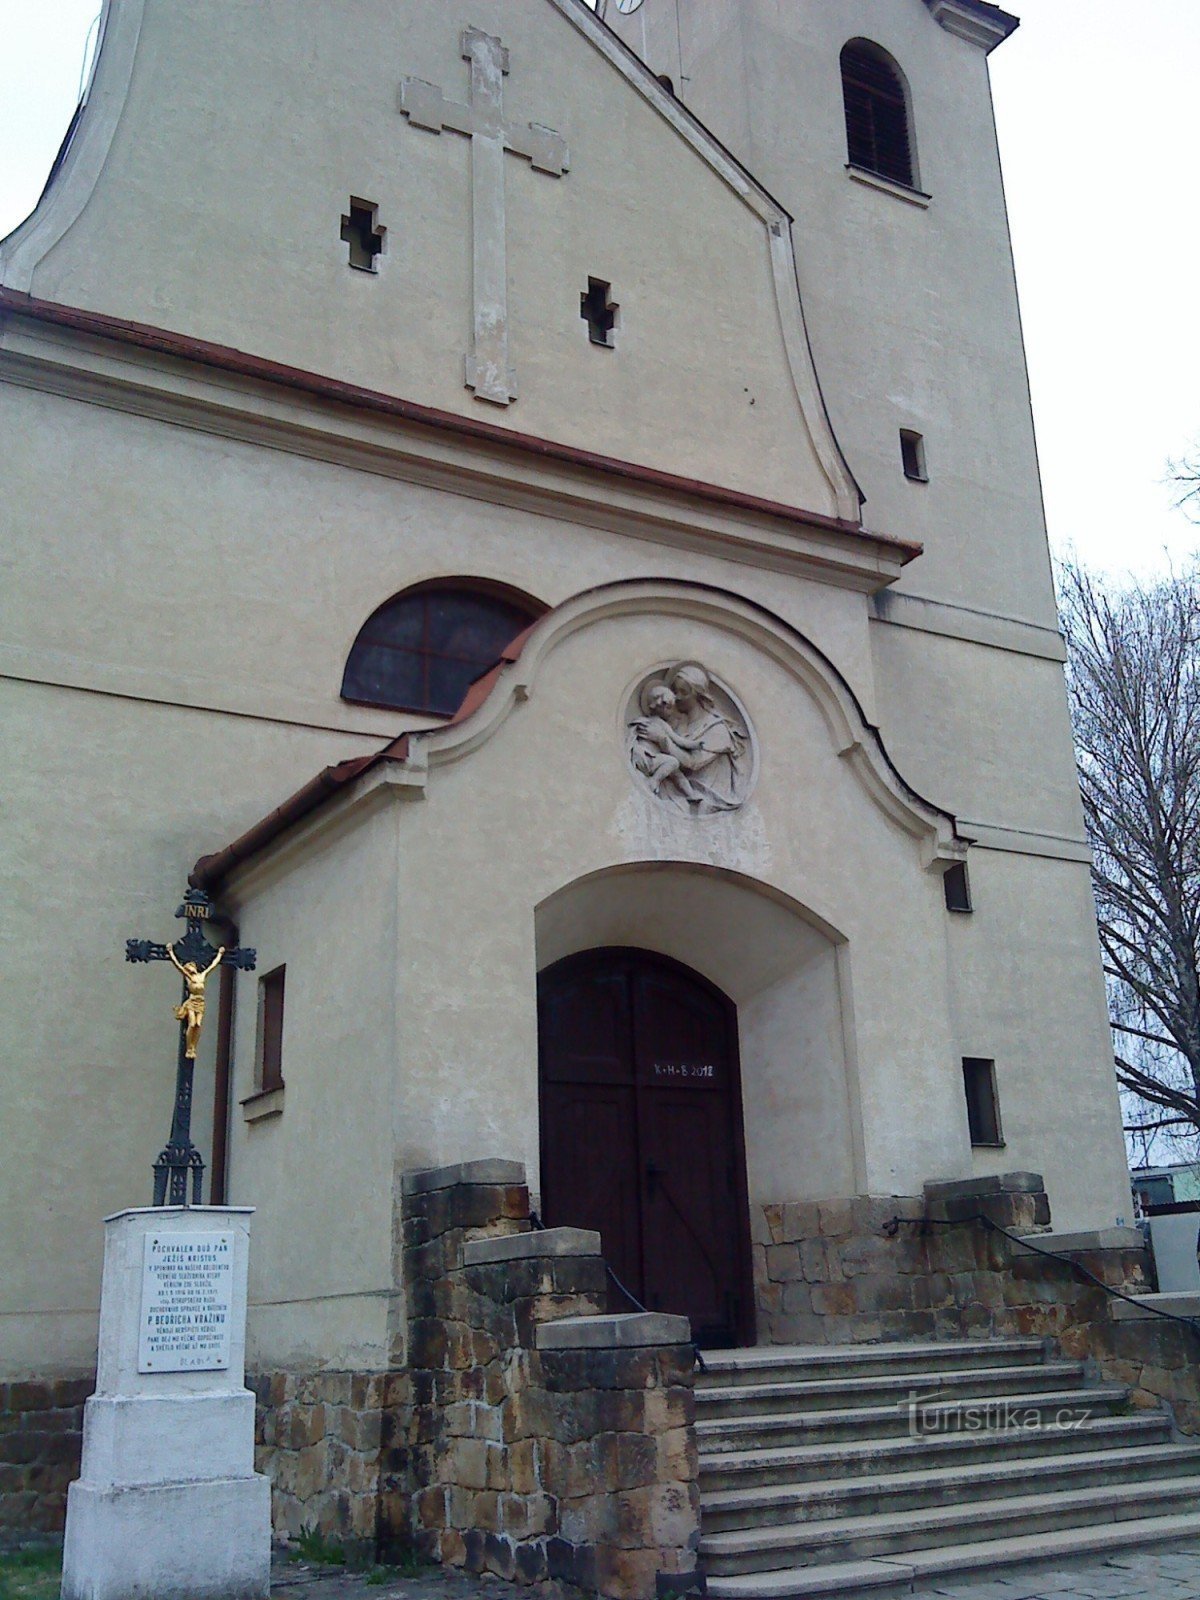 Biserica Sf. Klement Maria Hofbauer din Brno